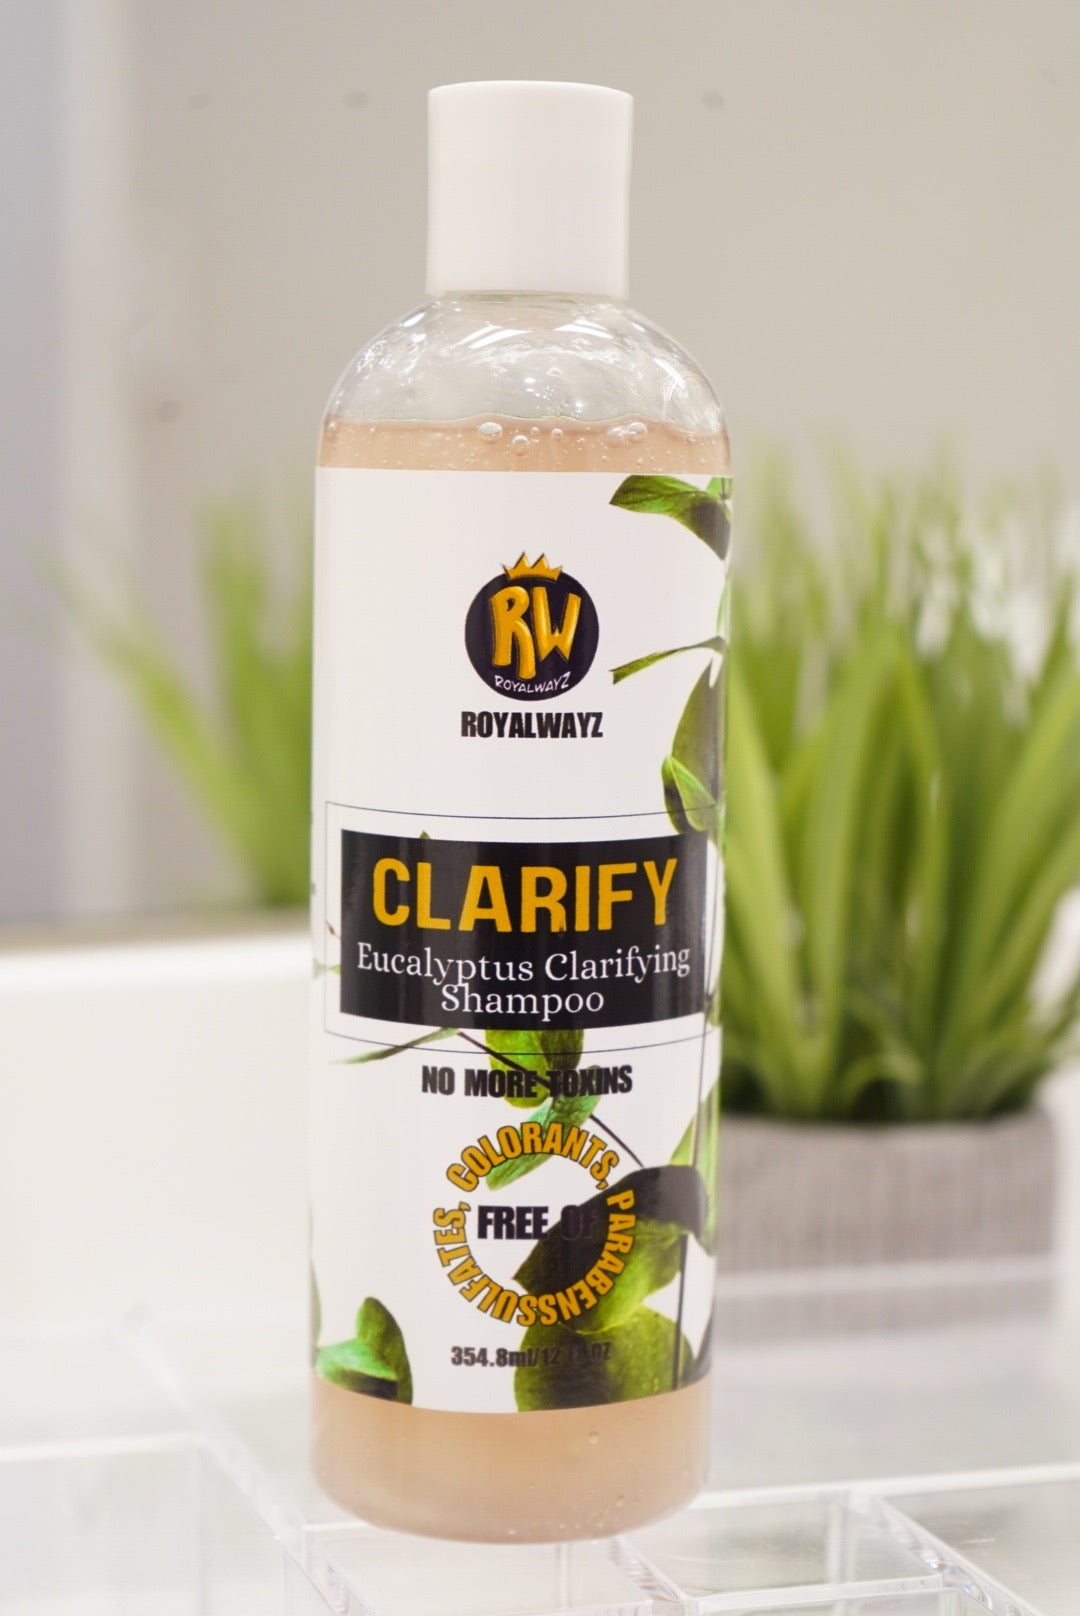 Eucalyptus Clarifying shampoo